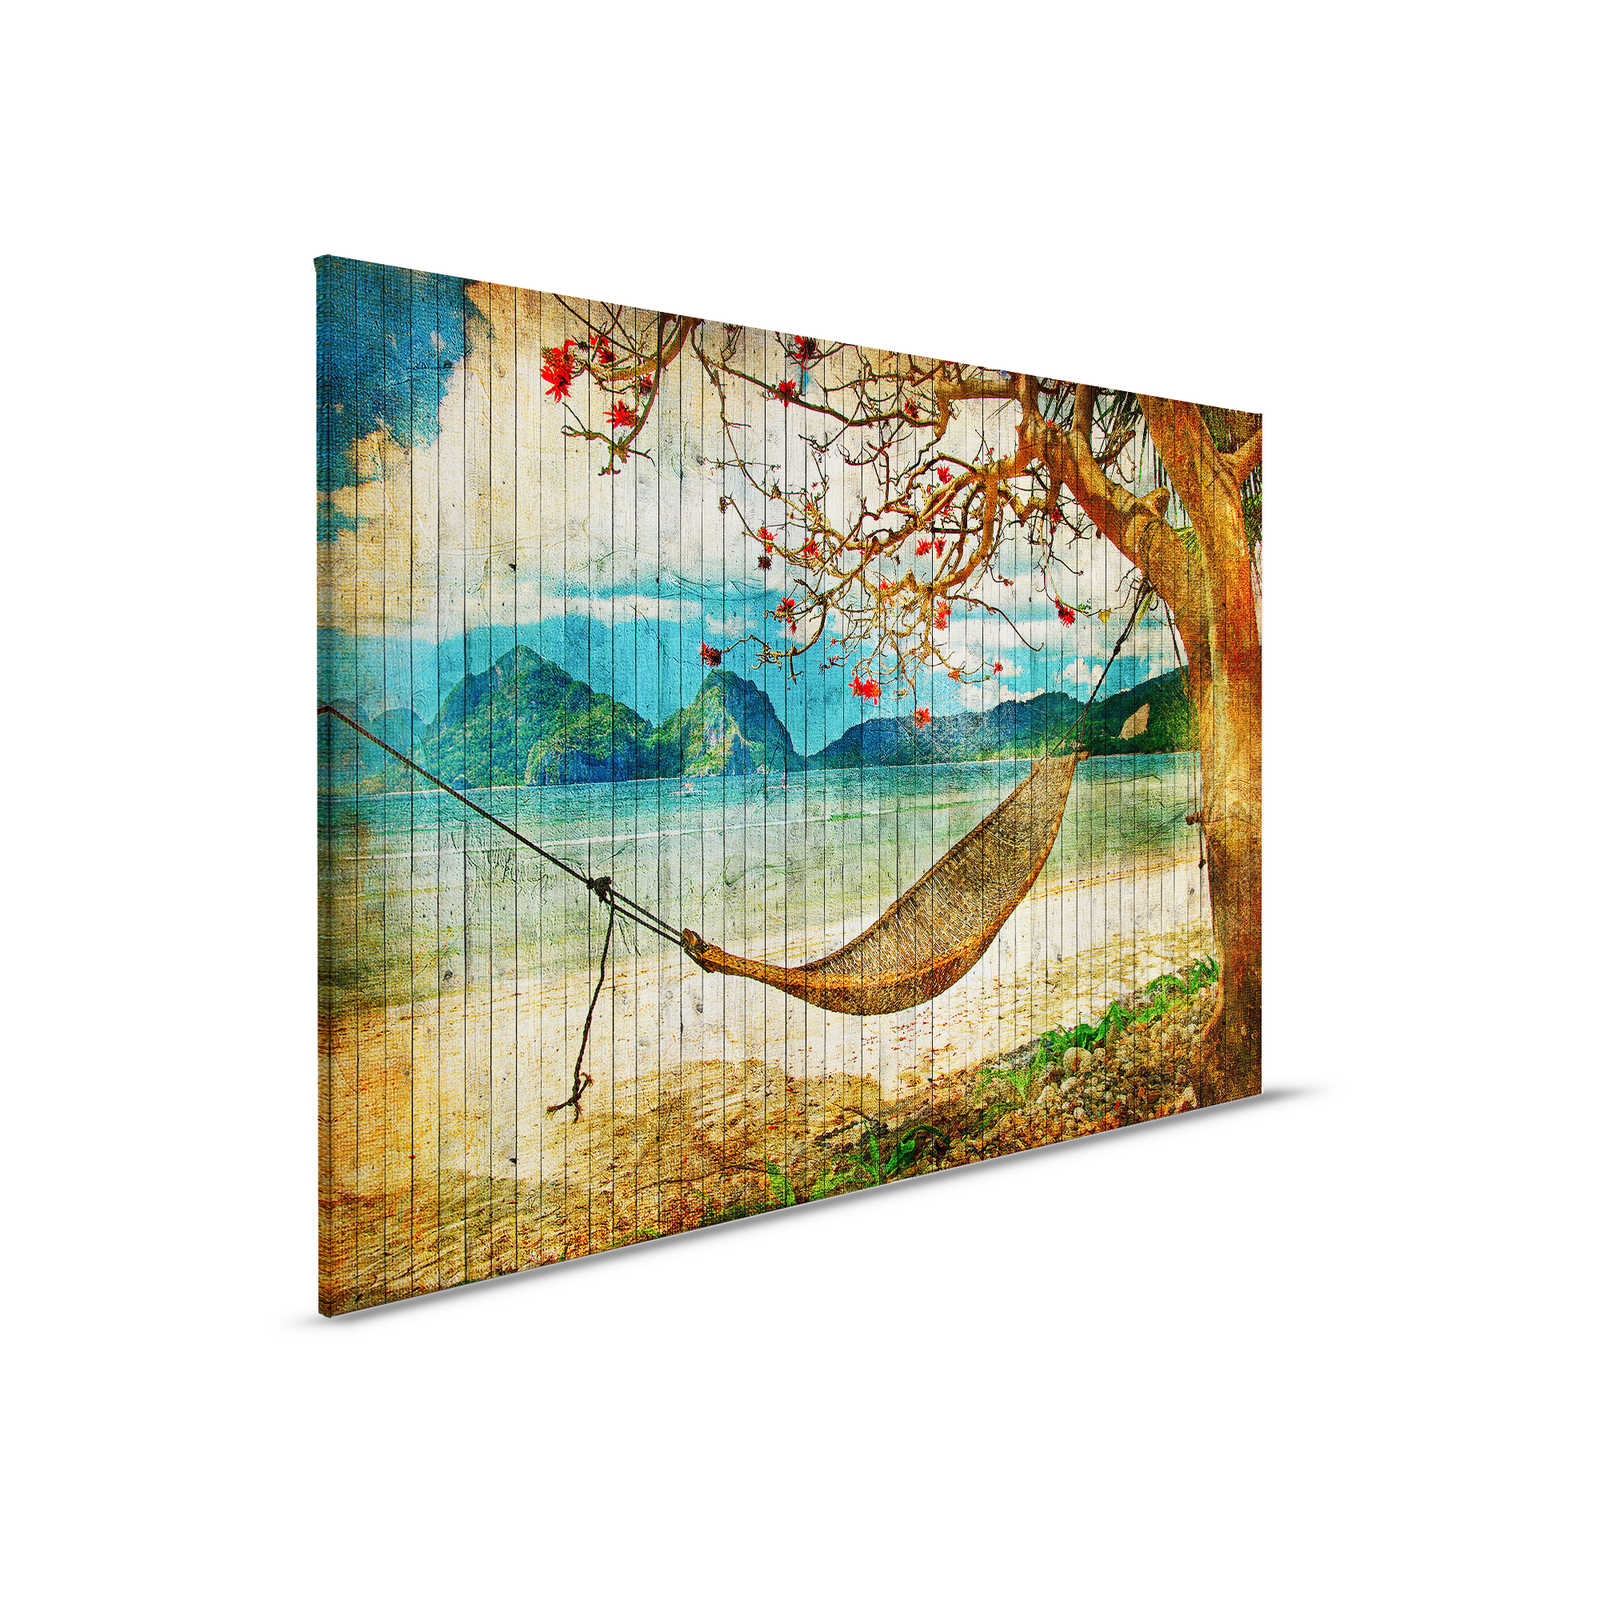         Tahiti 2 - Canvas painting in wood panel optic with hammock & South Seas beach - 0,90 m x 0,60 m
    